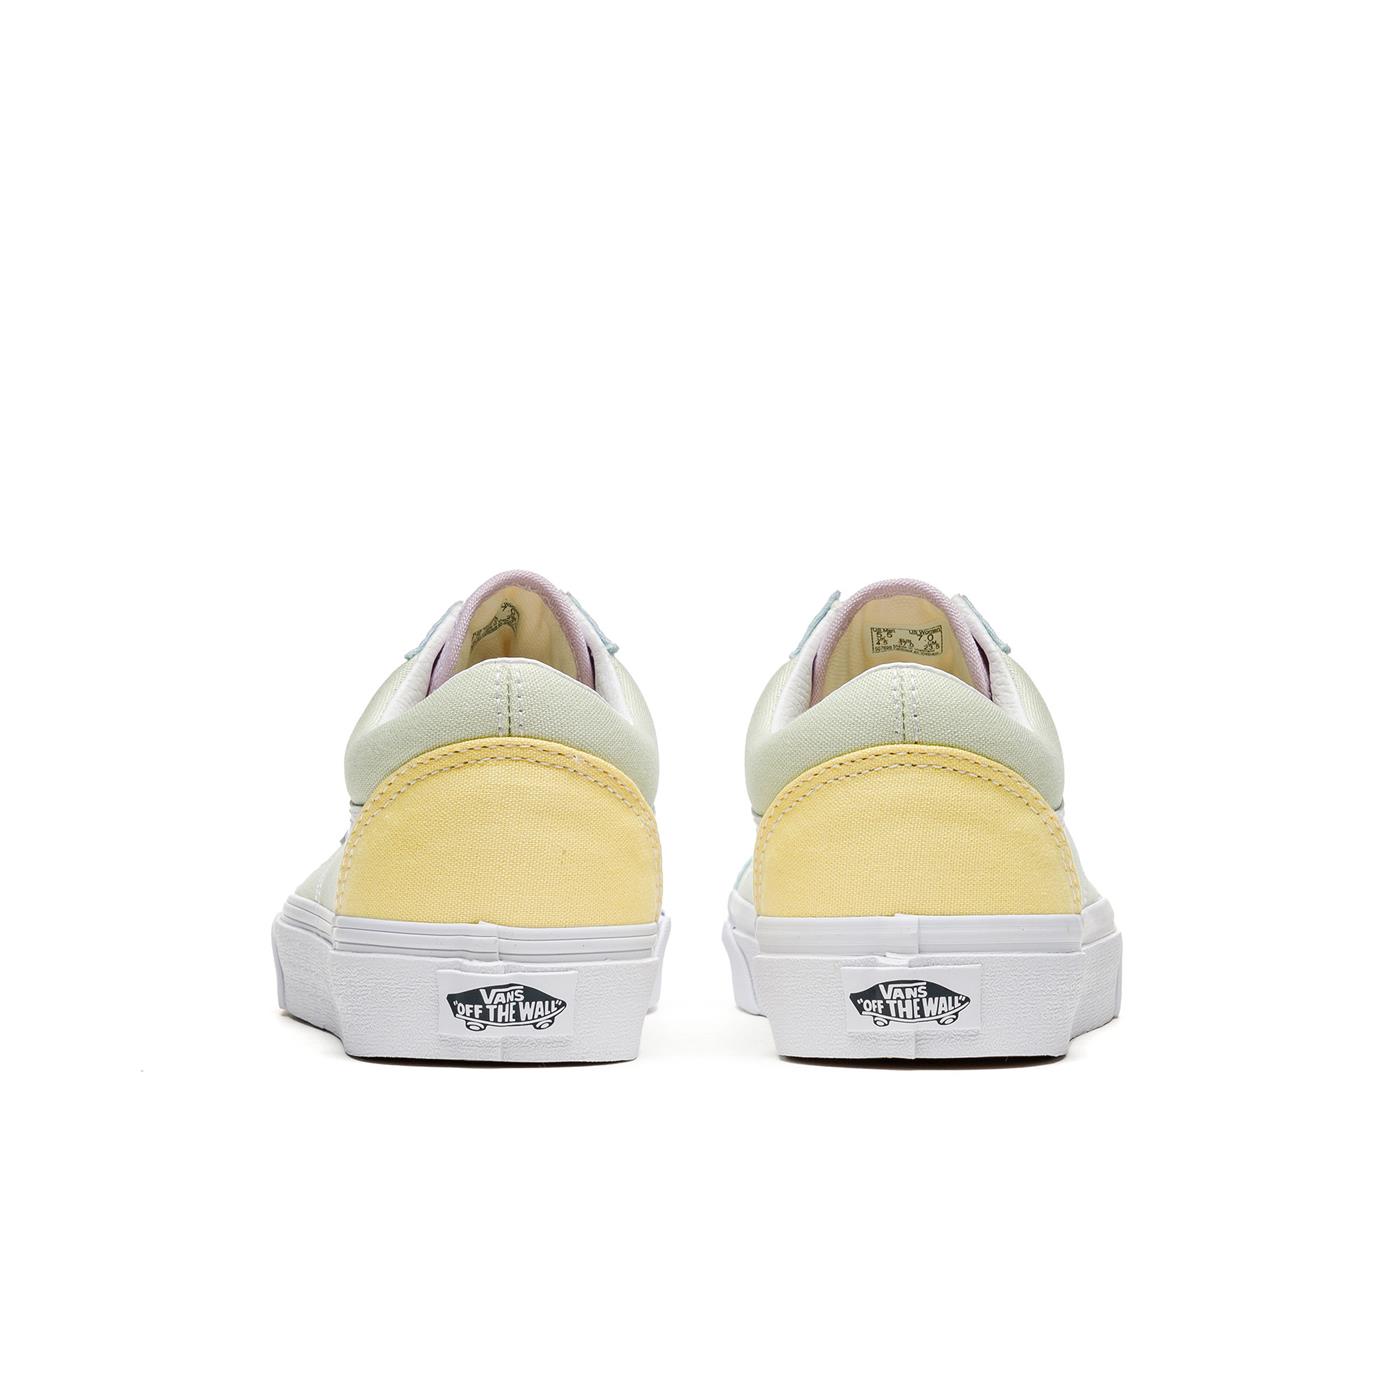 VANS Plaid Era Yellow & True White Womens Shoes - YELLOW/TRUE WHITE | Tillys